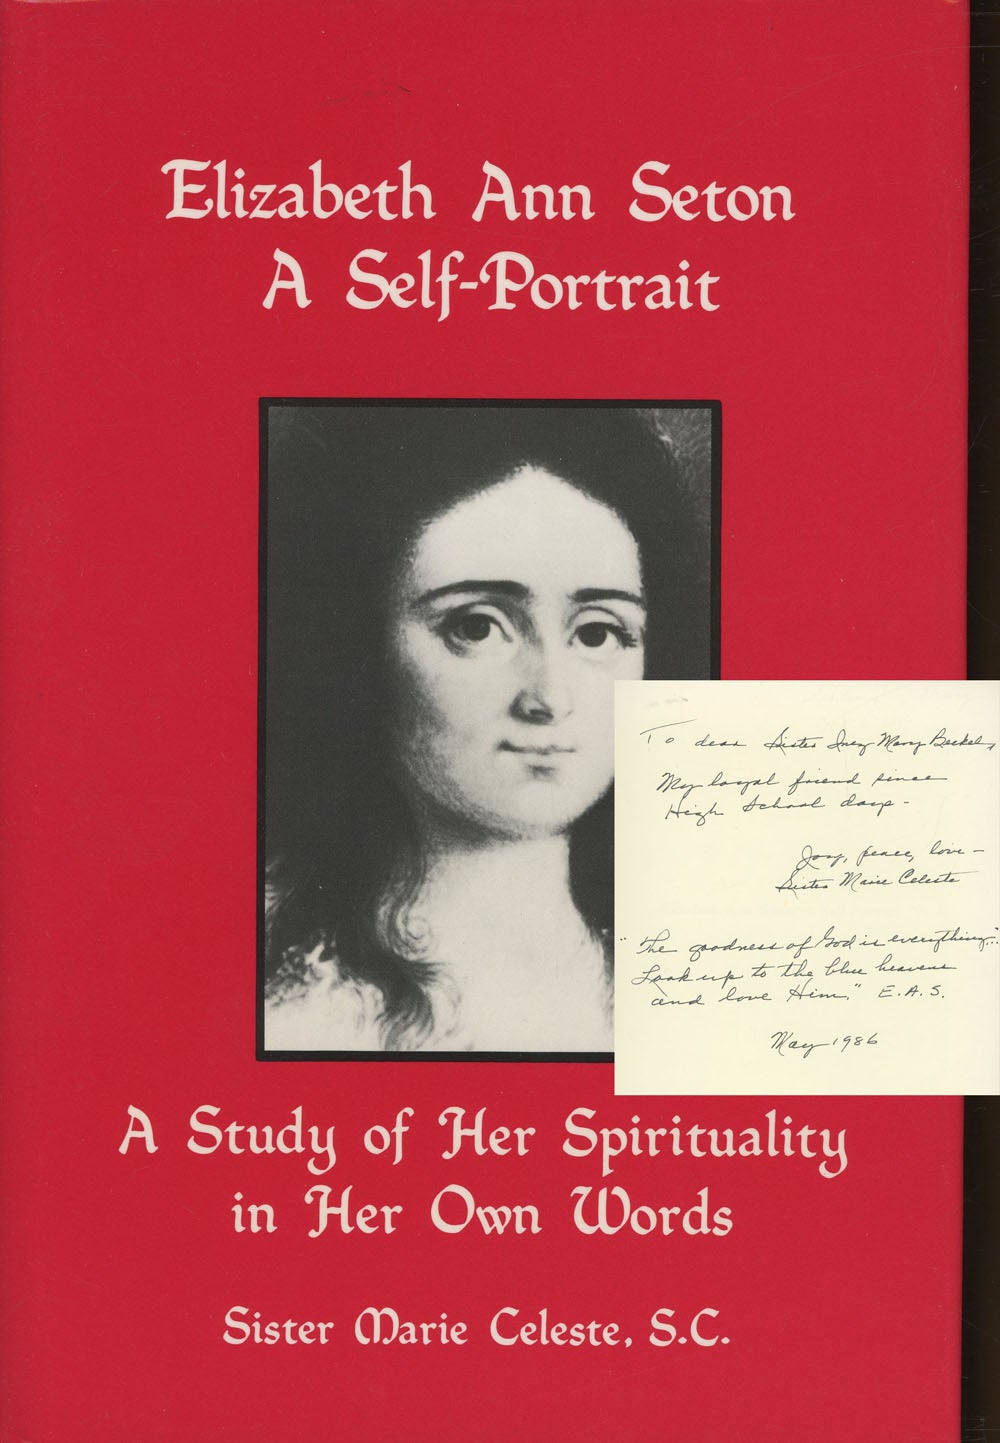 Sister Marie Celeste Cuzzolina / Elizabeth Ann Seton Self-Portrait ...